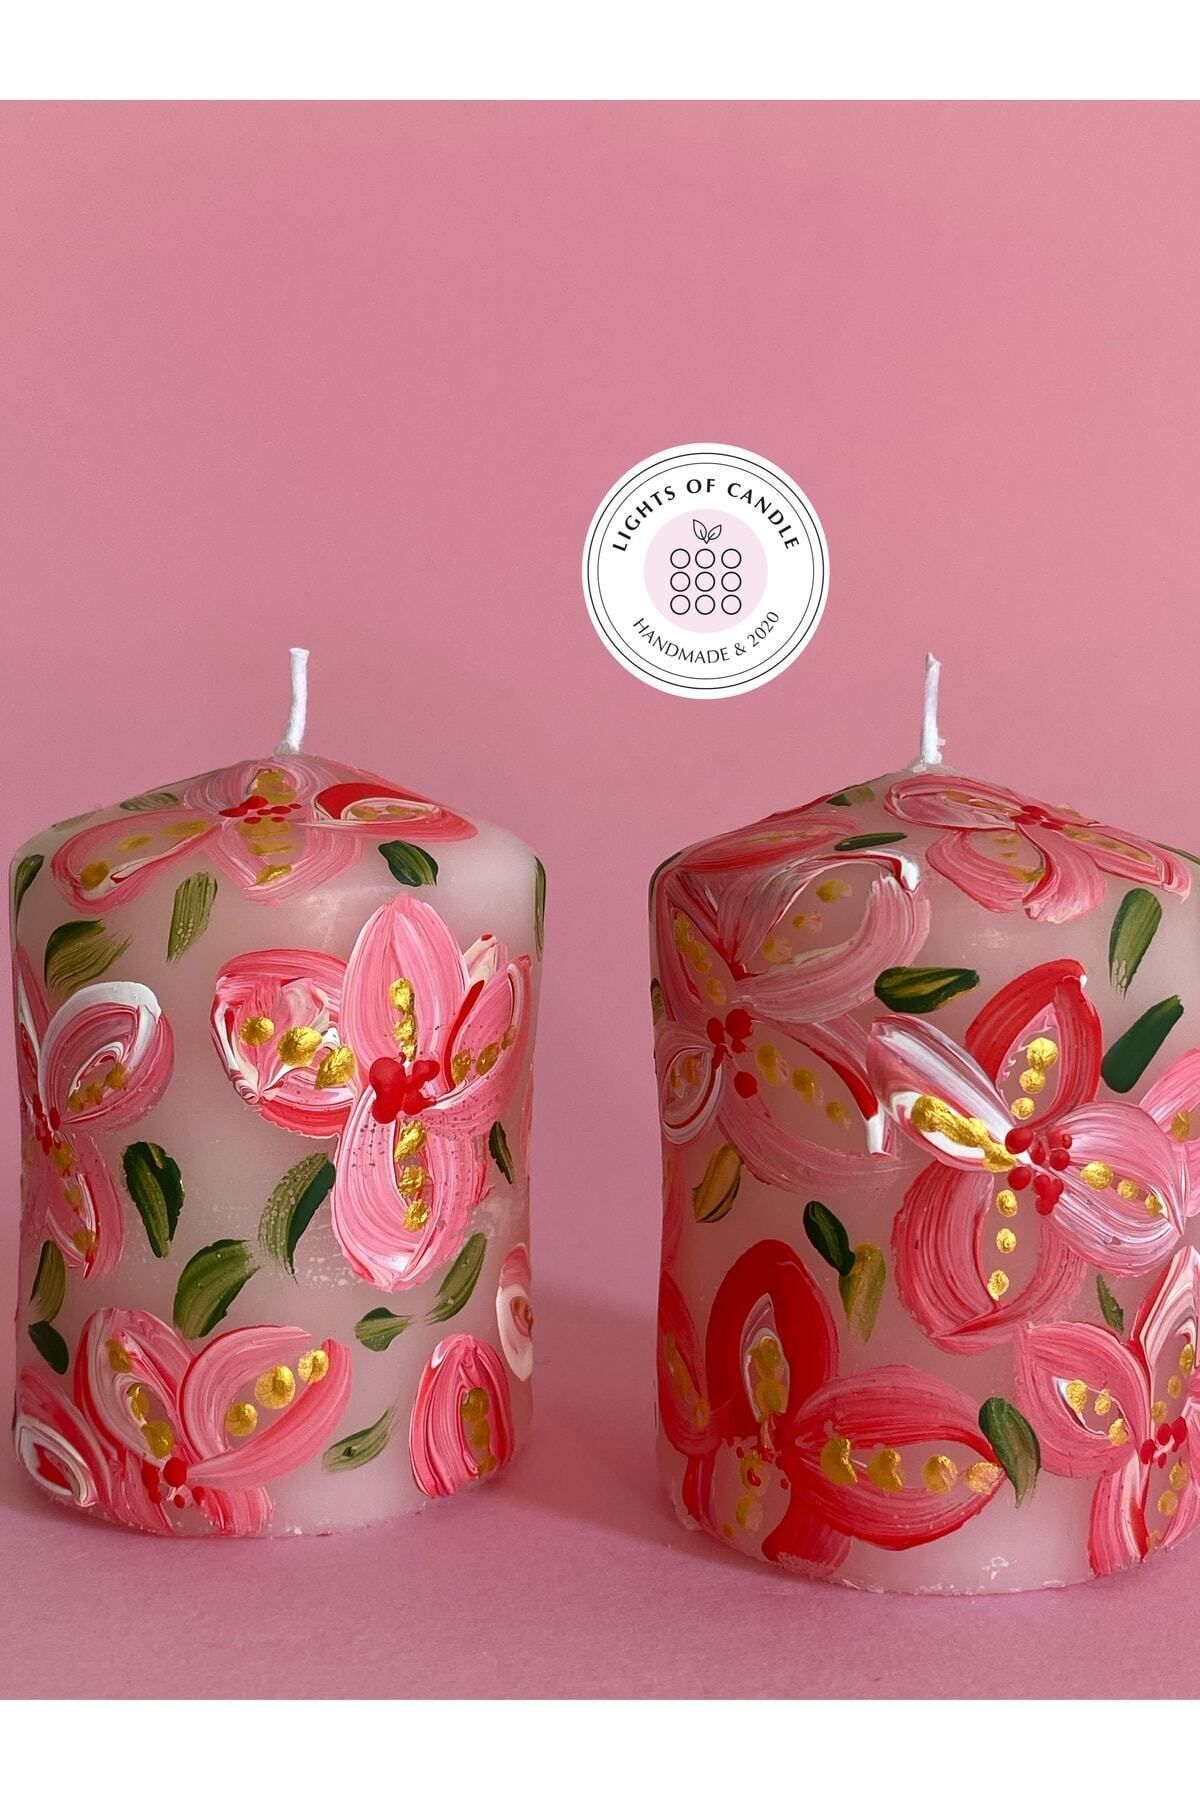 lıghts of candle handmade & 2020 Çiçek Desenli El Boyaması 2'li Blok Mum